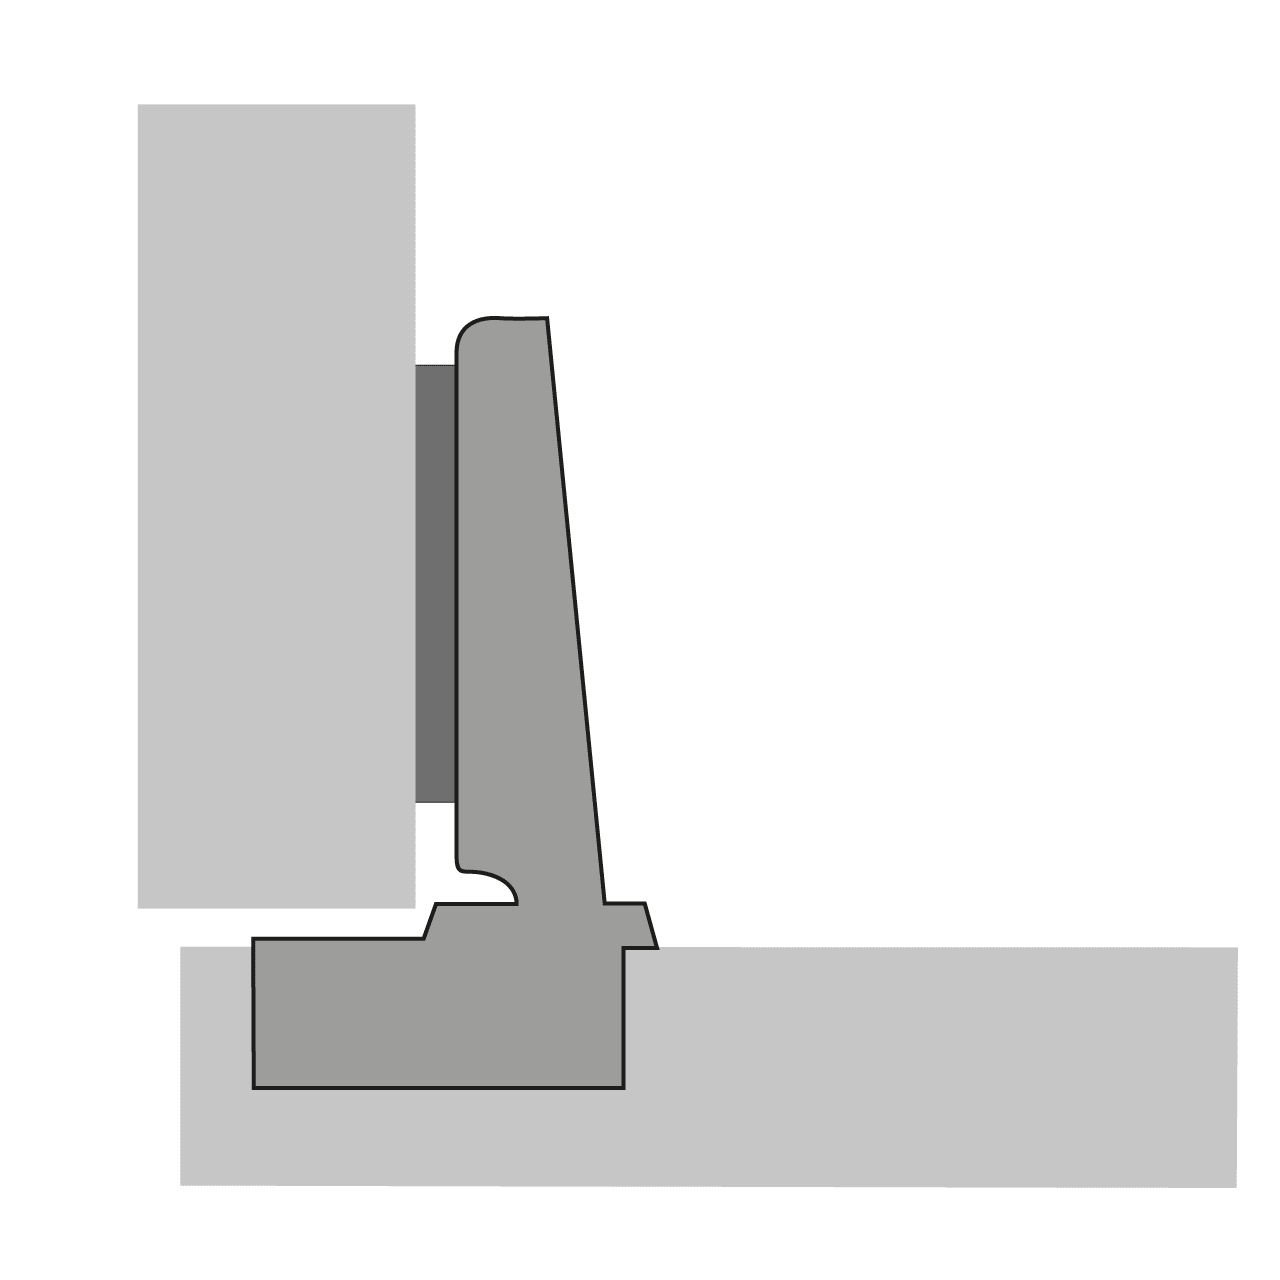 HETTICH Intermat 110° Standardscharnier (Intermat 9943), TH 52 x 5,5 mm, 48053